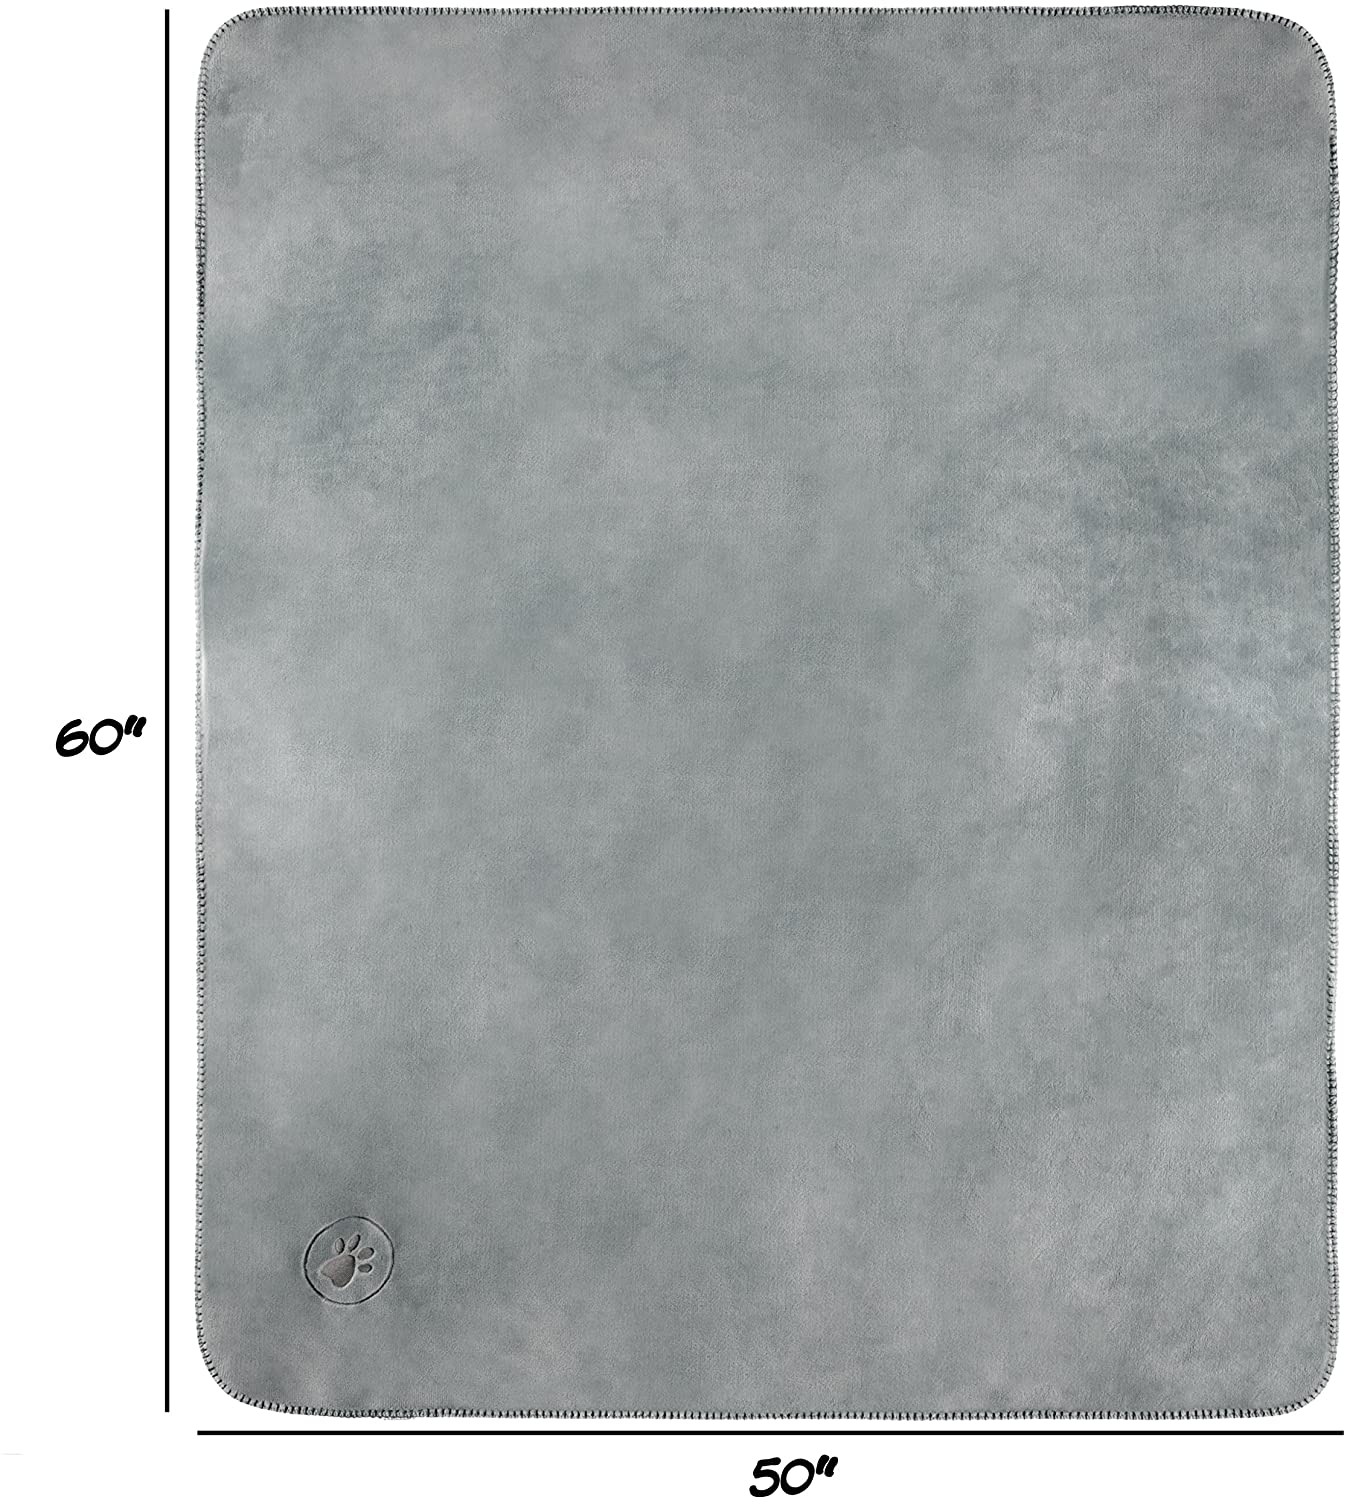  ODM Polyester Reversible Light Grey Dog Waterproof Pet Blanket